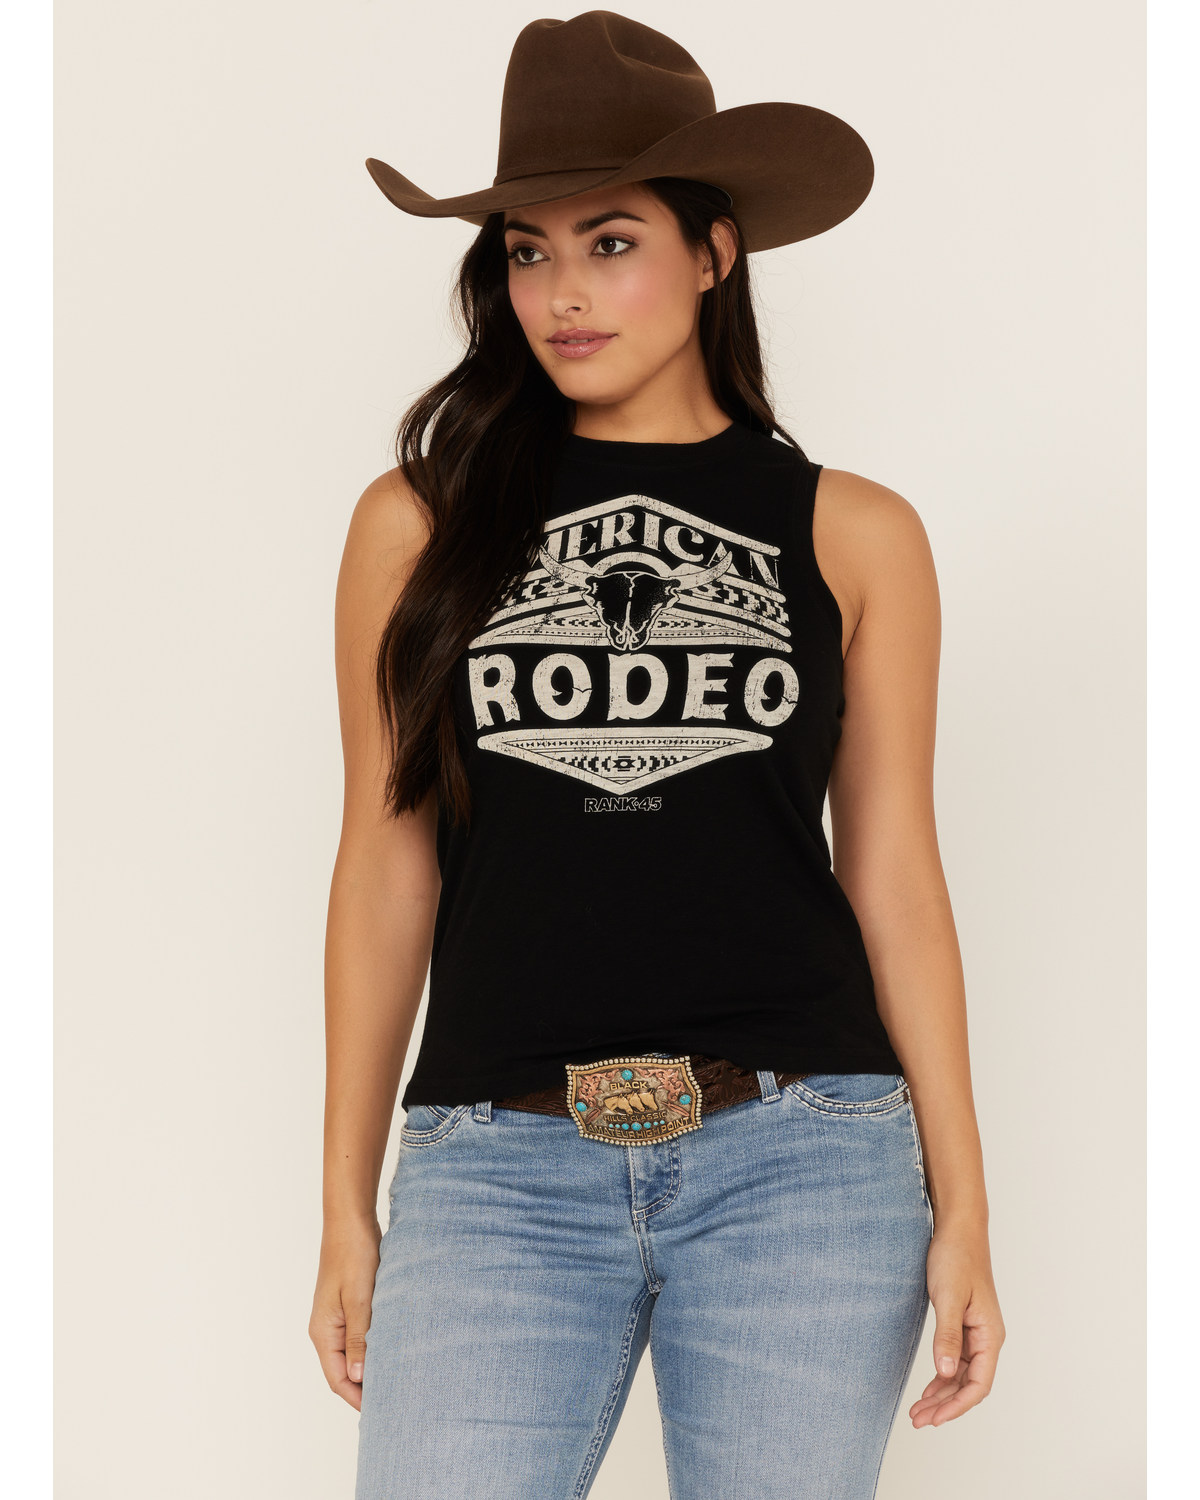 RANK 45® Women's American Rodeo Steer Head Graphic Tank Top